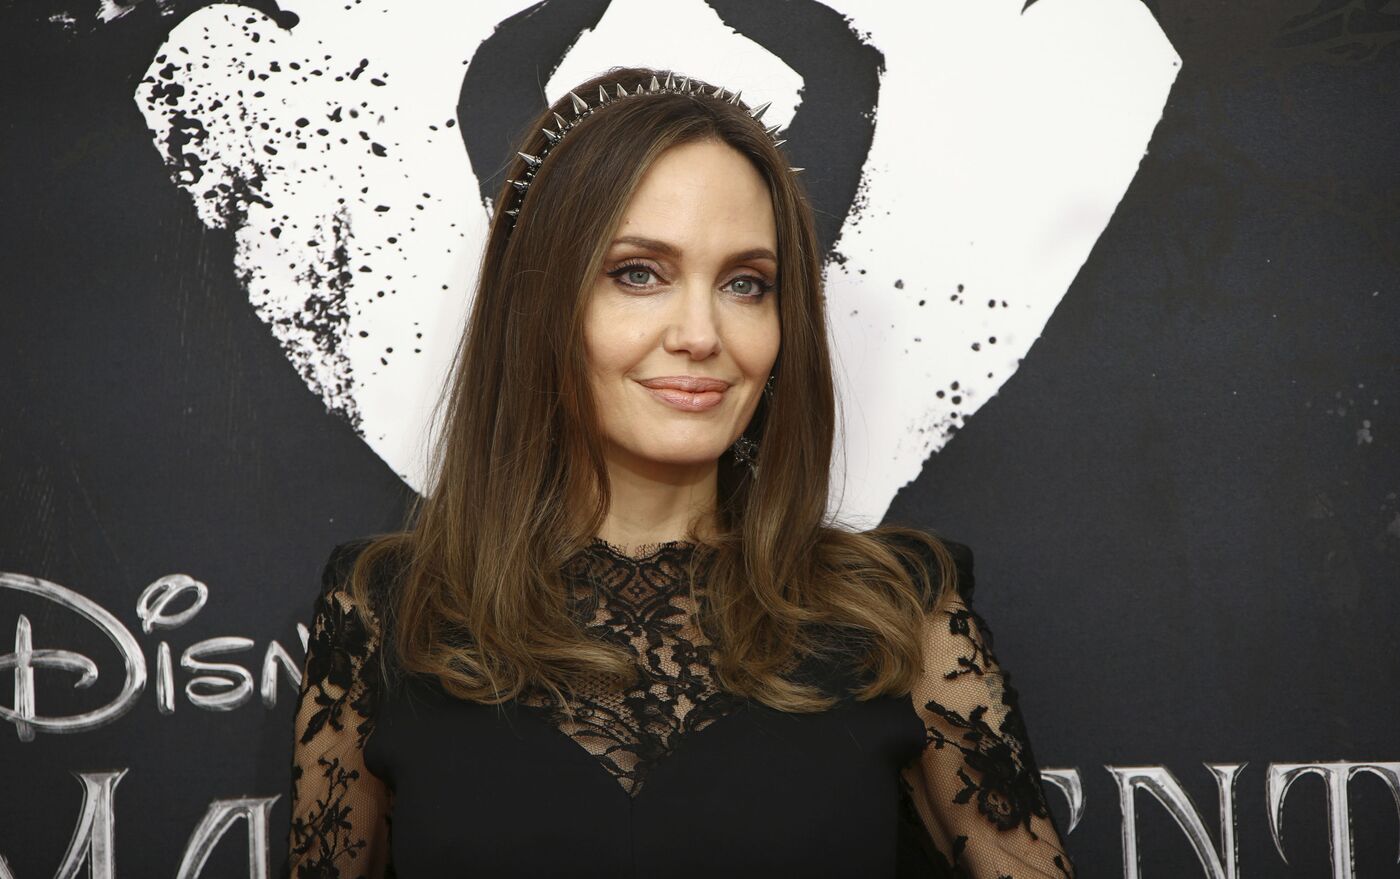 Порно видео с Angelina Jolie (Анджелина Джоли)